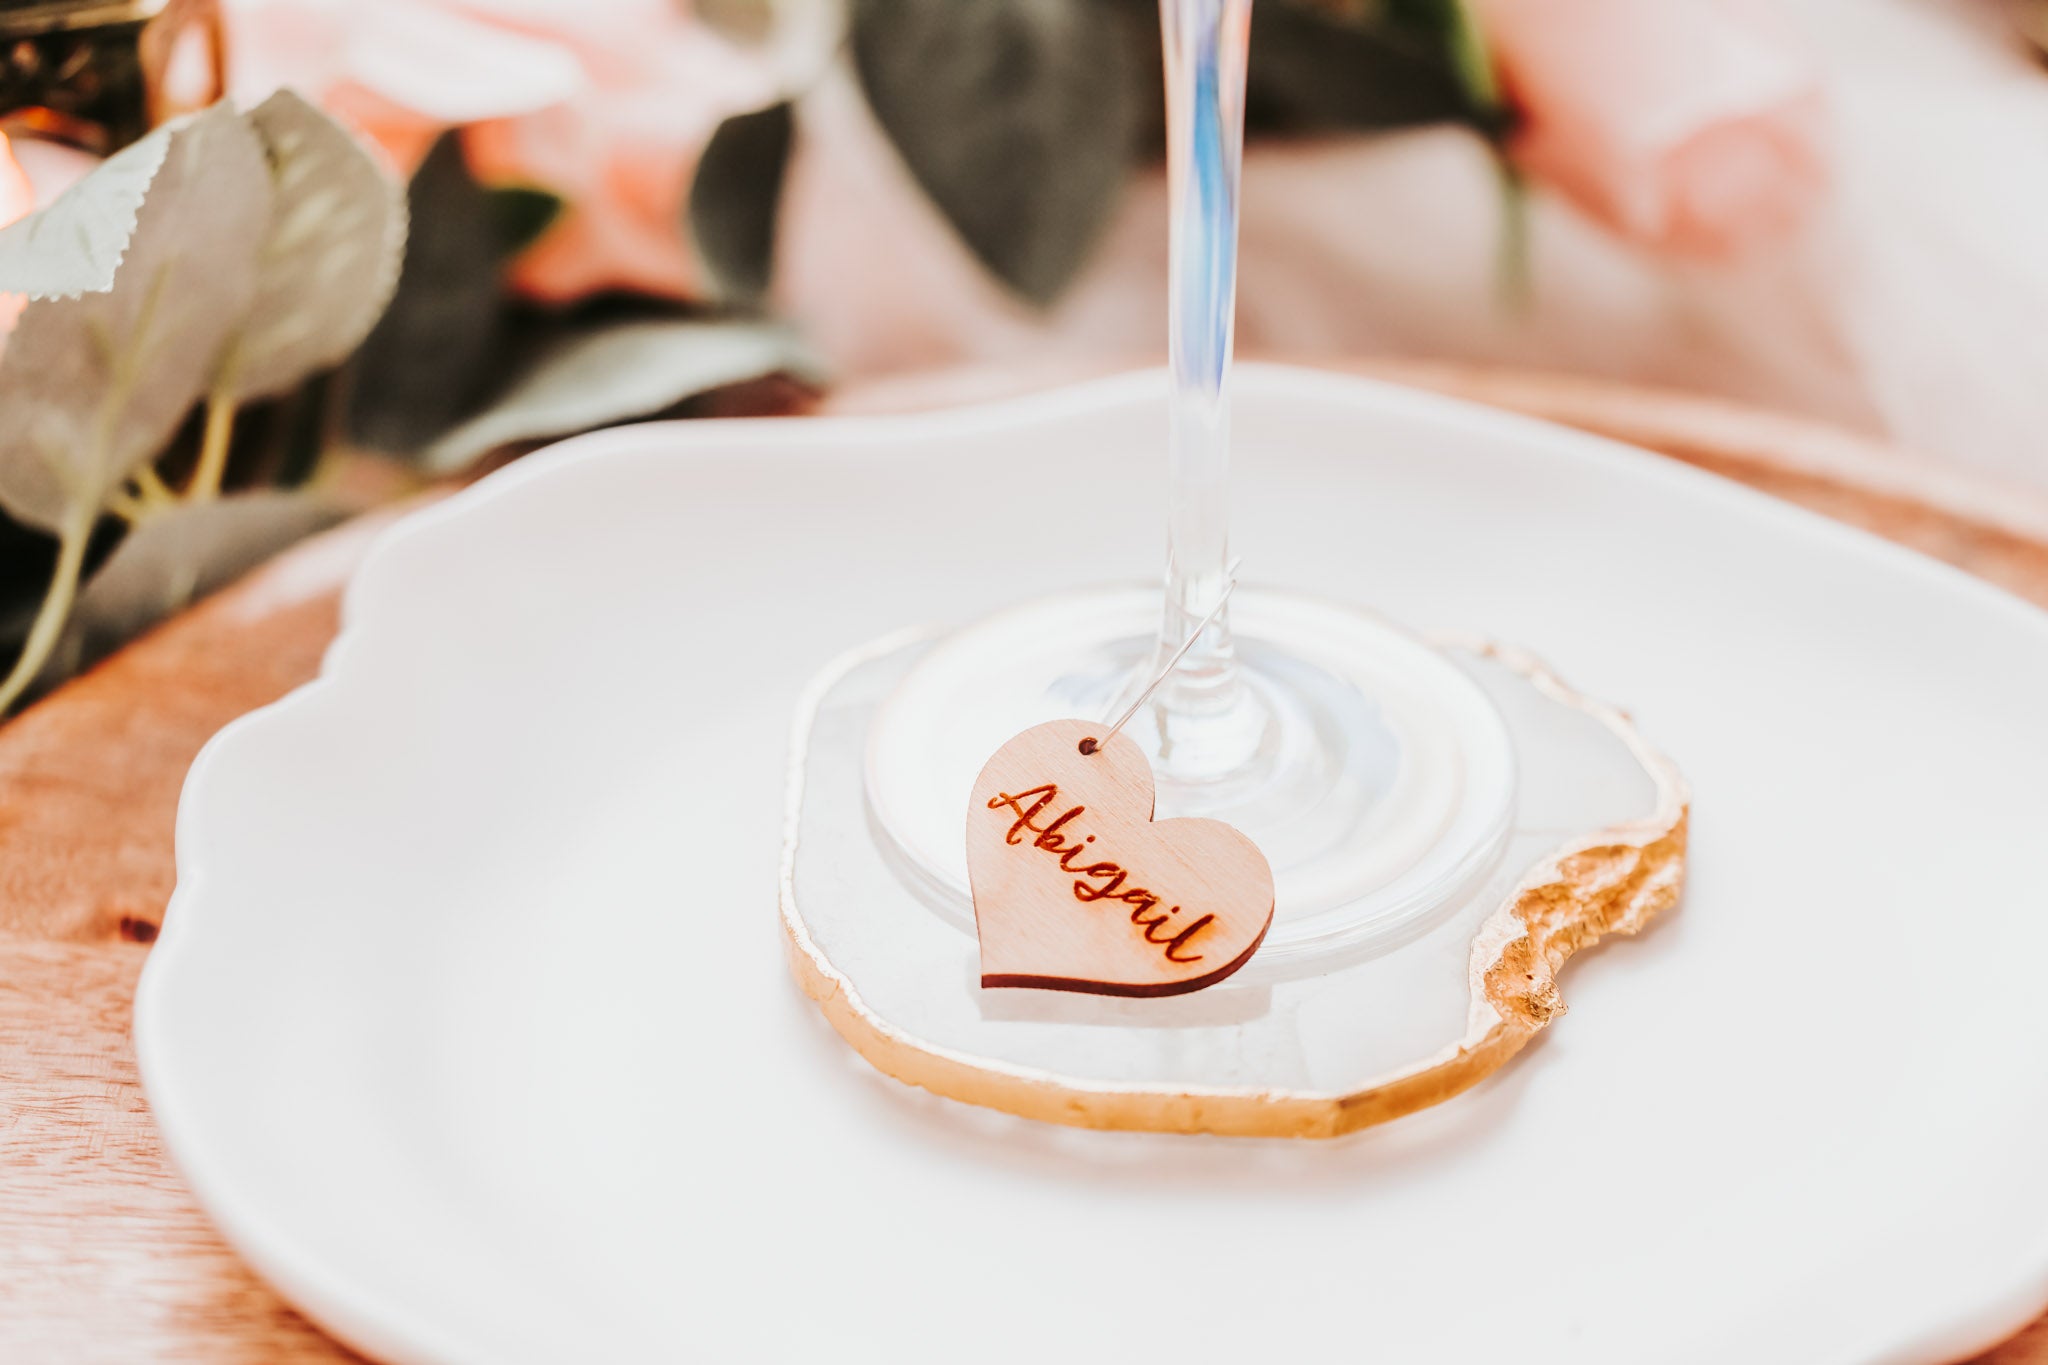 Cute Heart Shaped Wine Glass Charm Place Setting For Birthdays Weddings